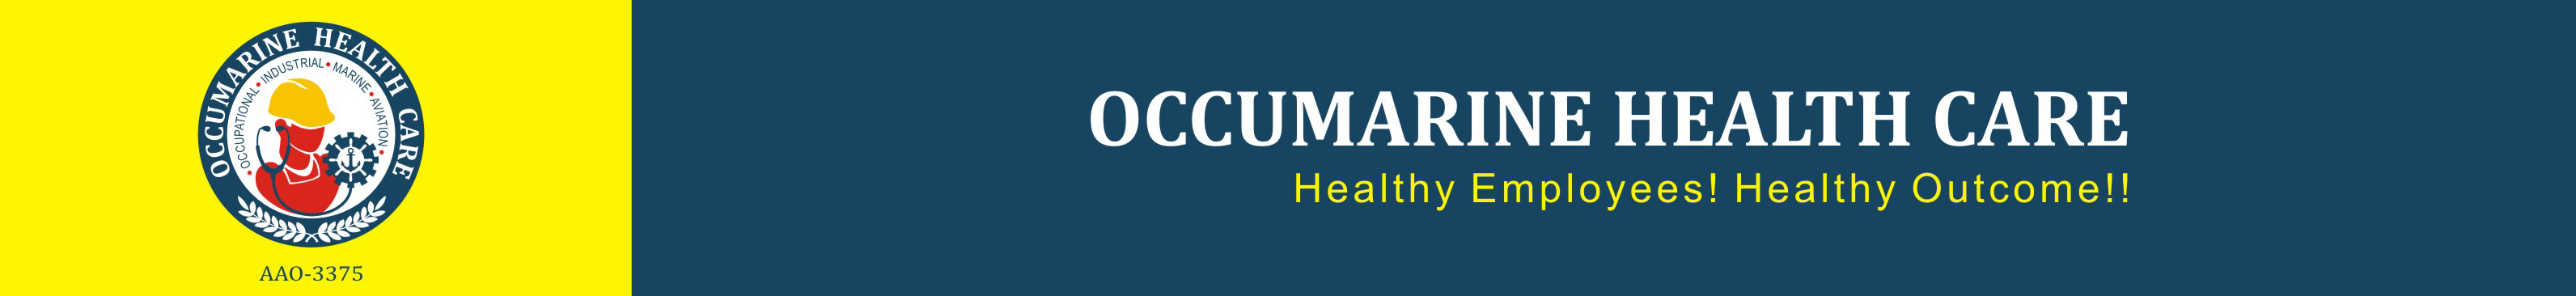 OccuMarine Health Care 